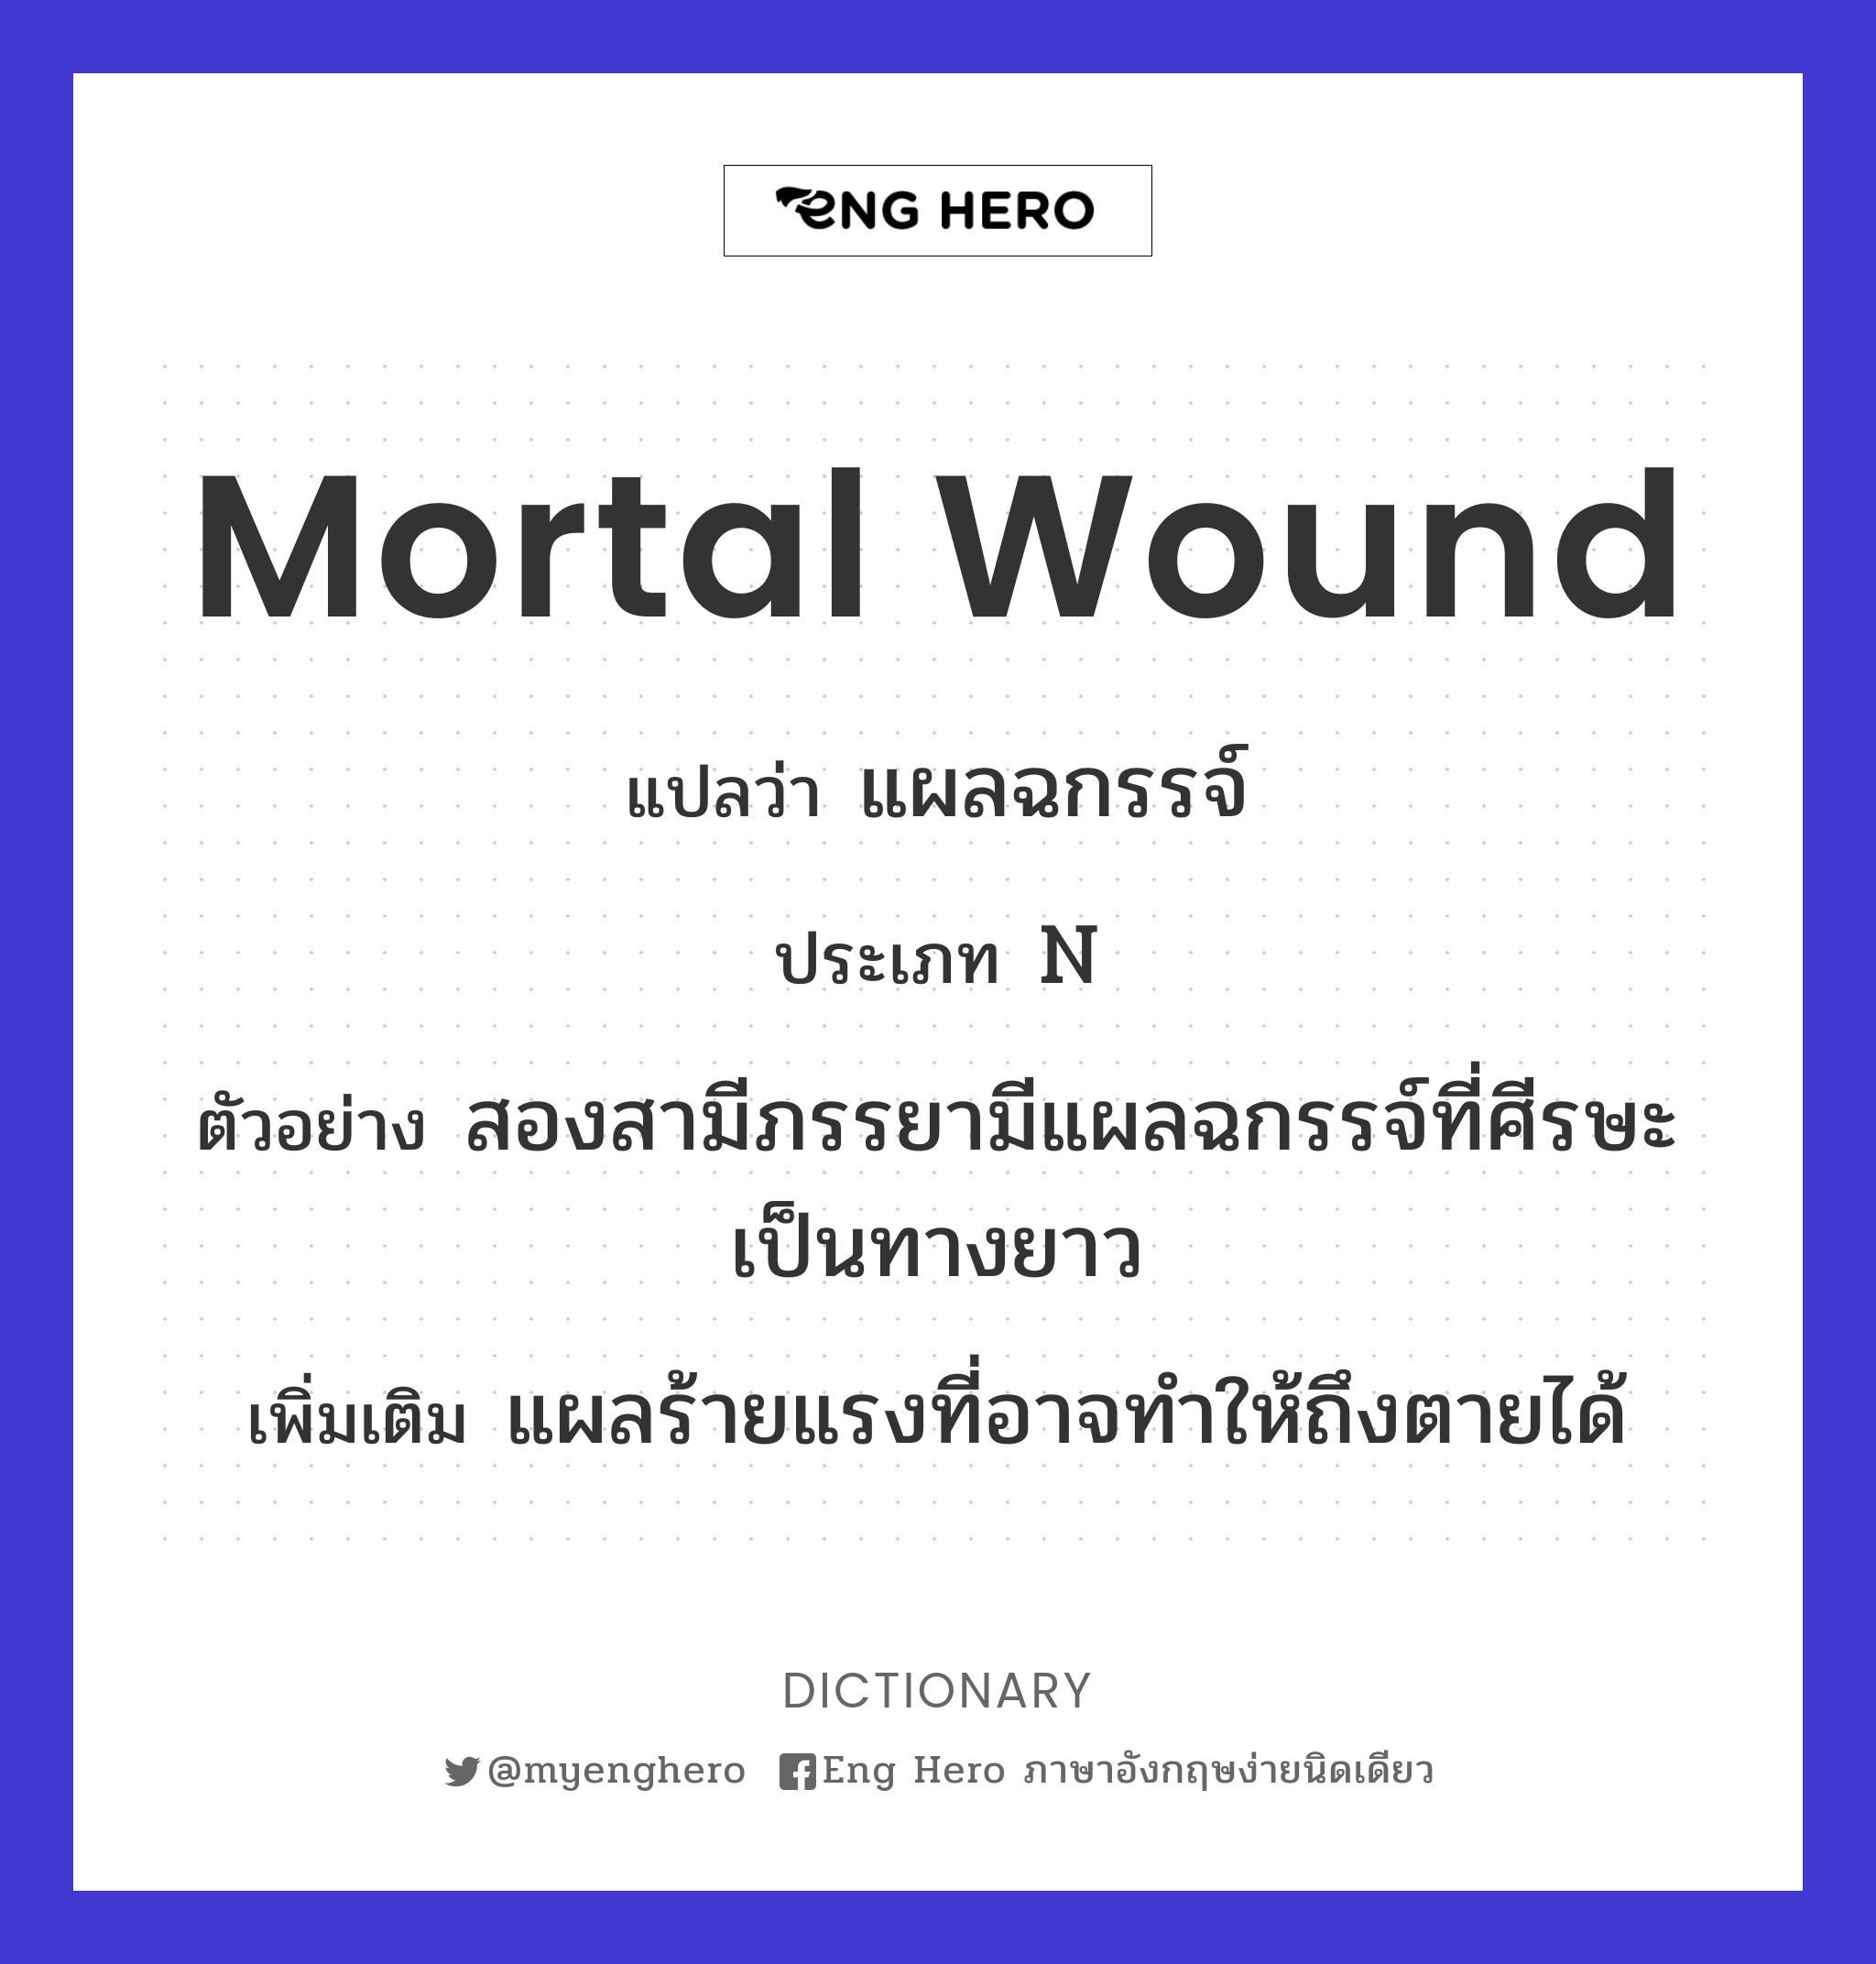 mortal wound